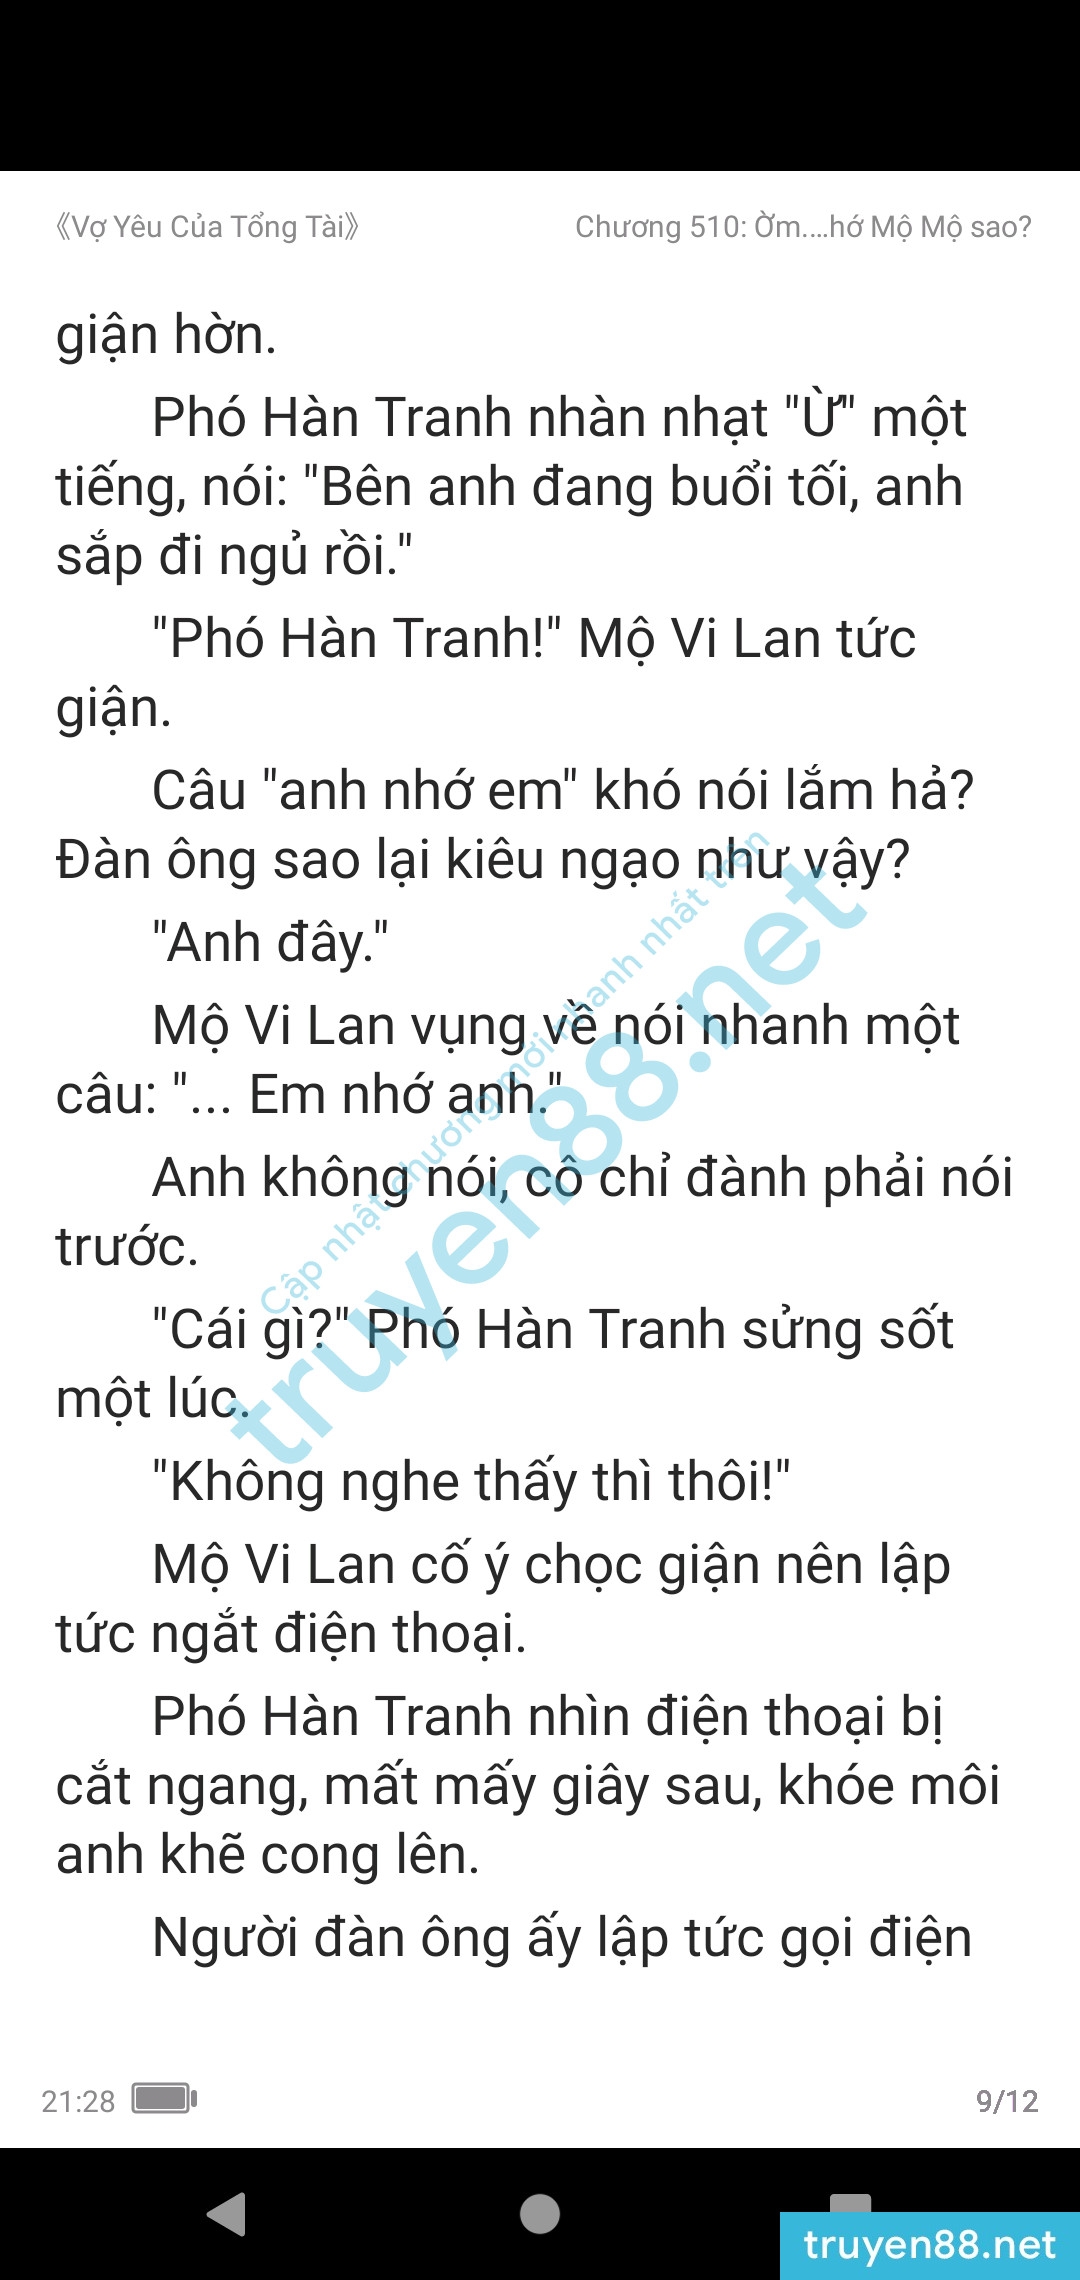 vo-yeu-cua-tong-tai-mo-vi-lan--pho-han-tranh-520-0